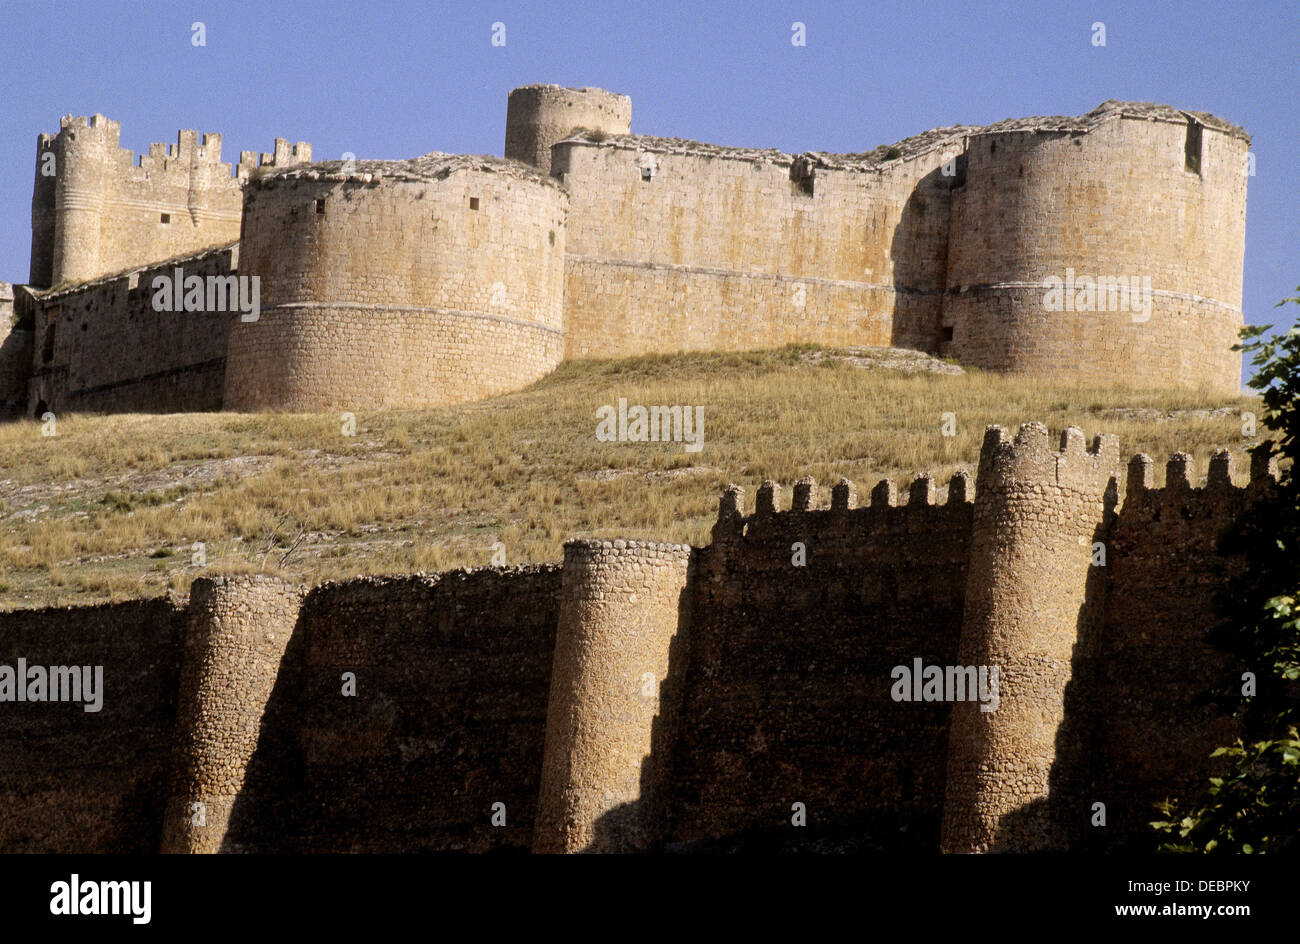 El Cid's fortress reveals medieval downsizing